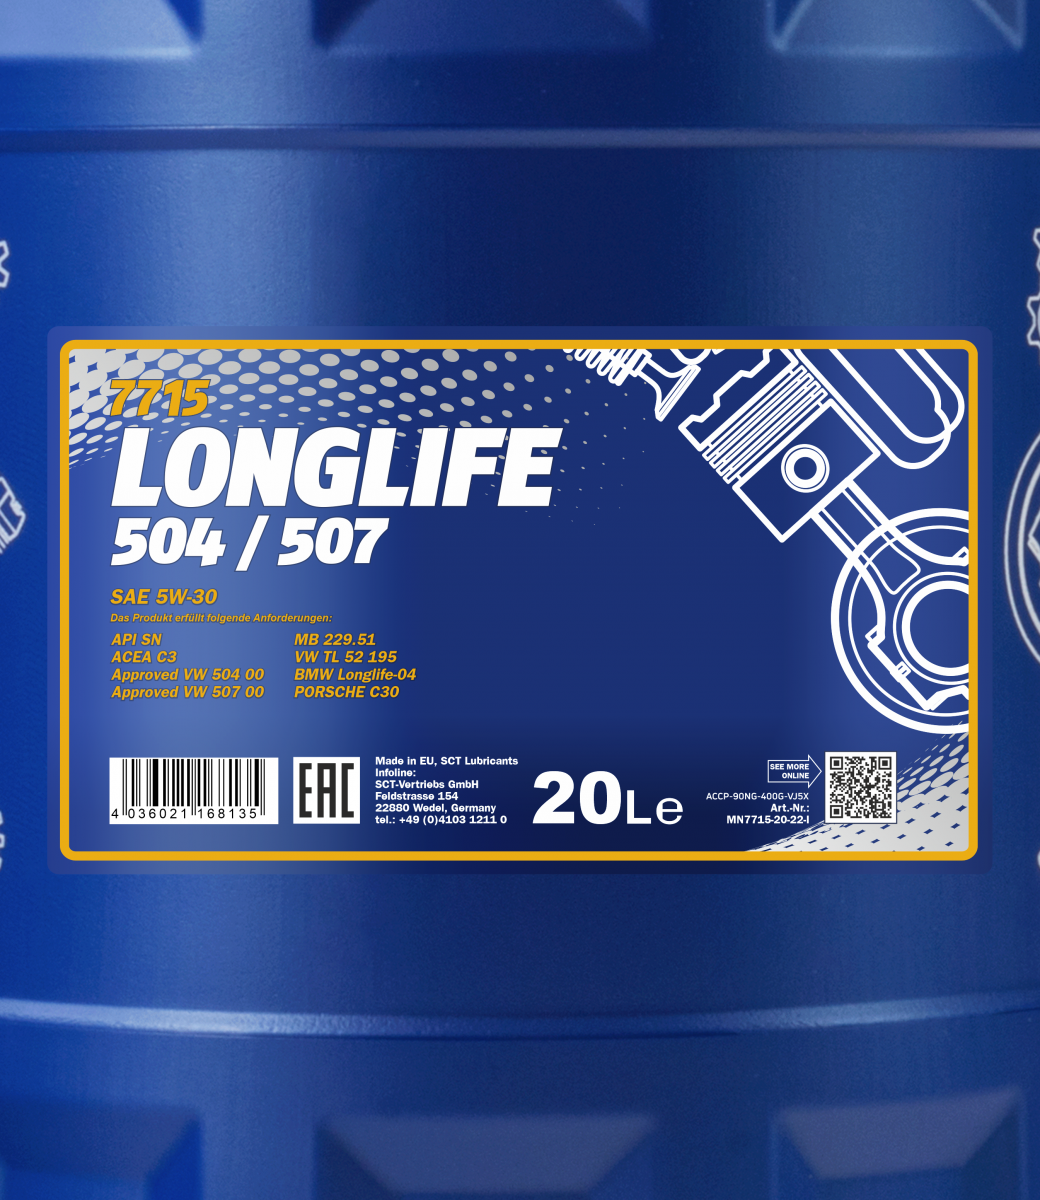 Mannol 7715 LONGLIFE 504/507 5W-30 Motoröl 3x 5 = 15 Liter - Motoröl  günstig kaufen